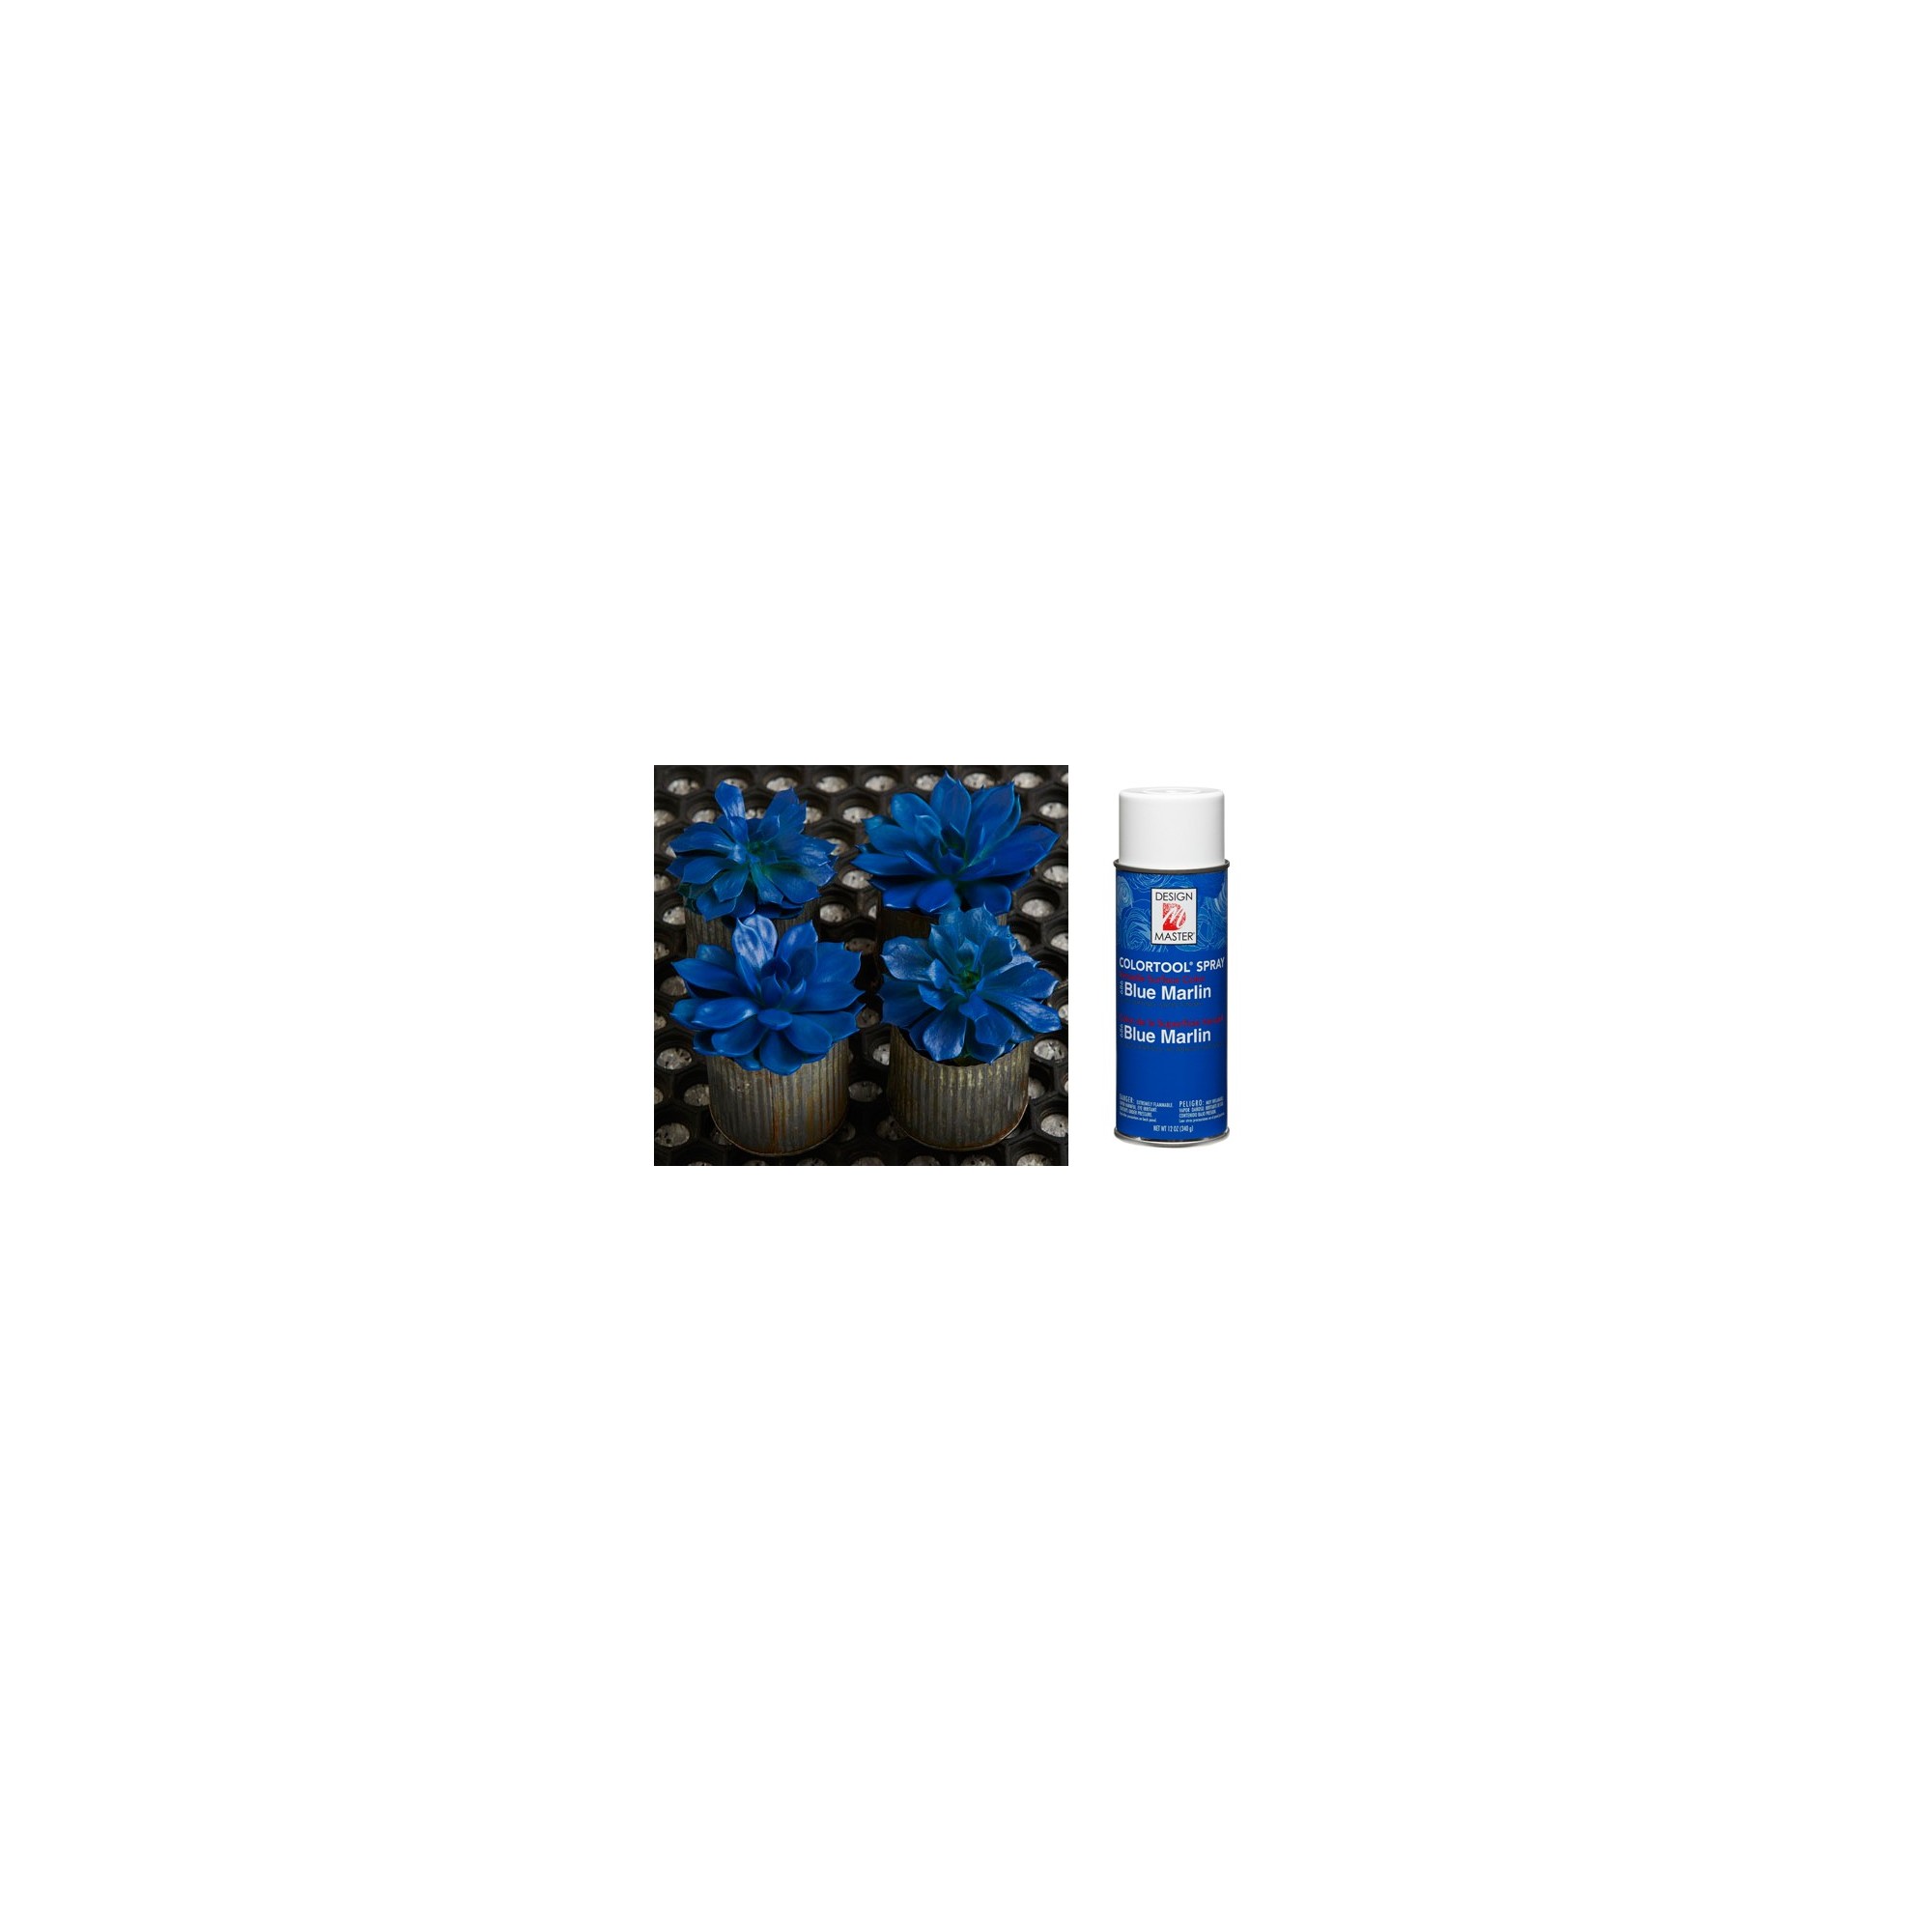 DirectFloral. Design Master Colortool Spray/ Ice Blue